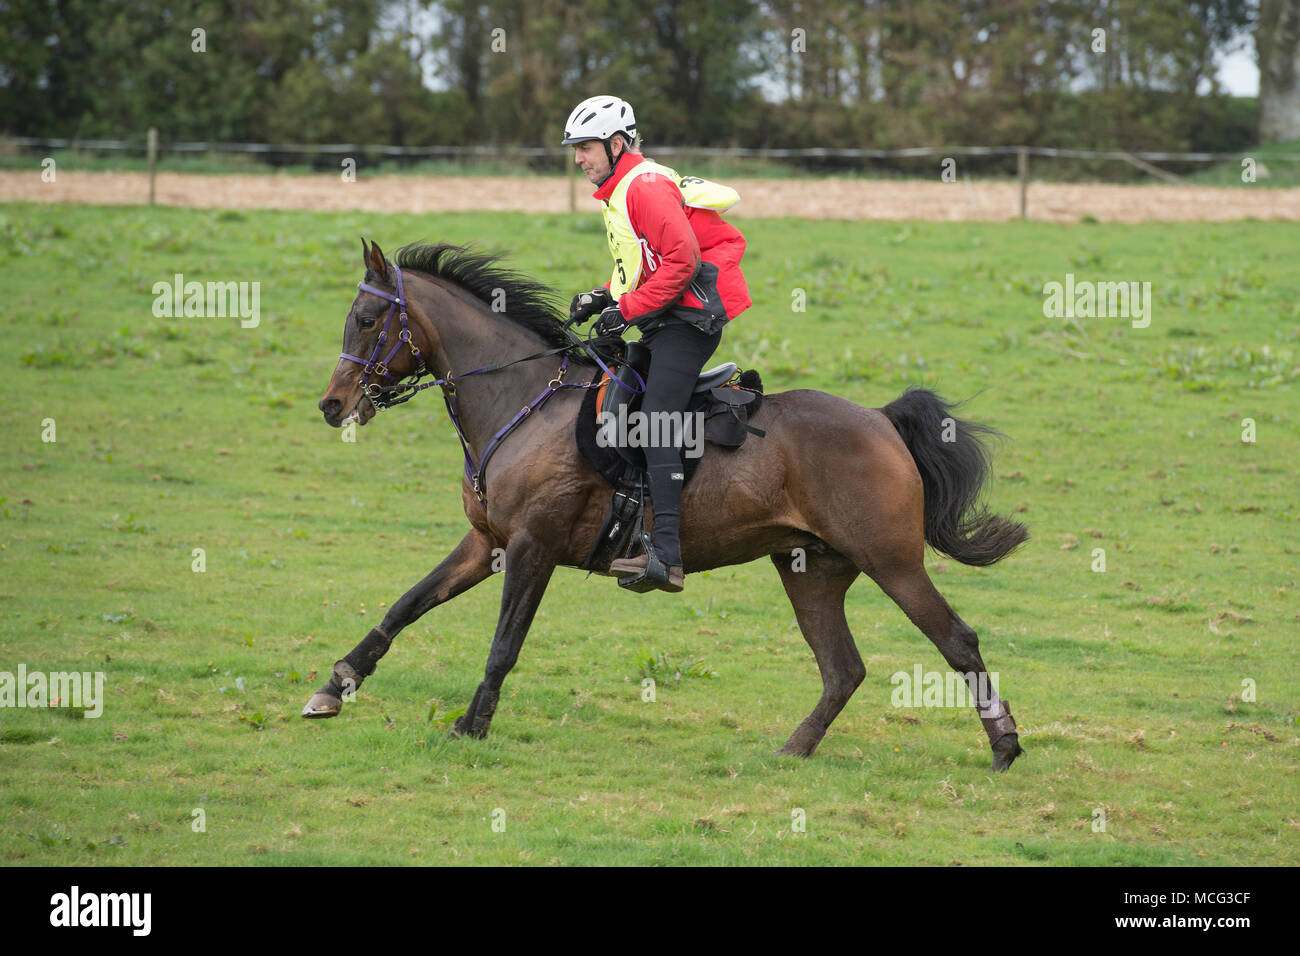 man galloping a horse on an endurance race UK Stock Photo